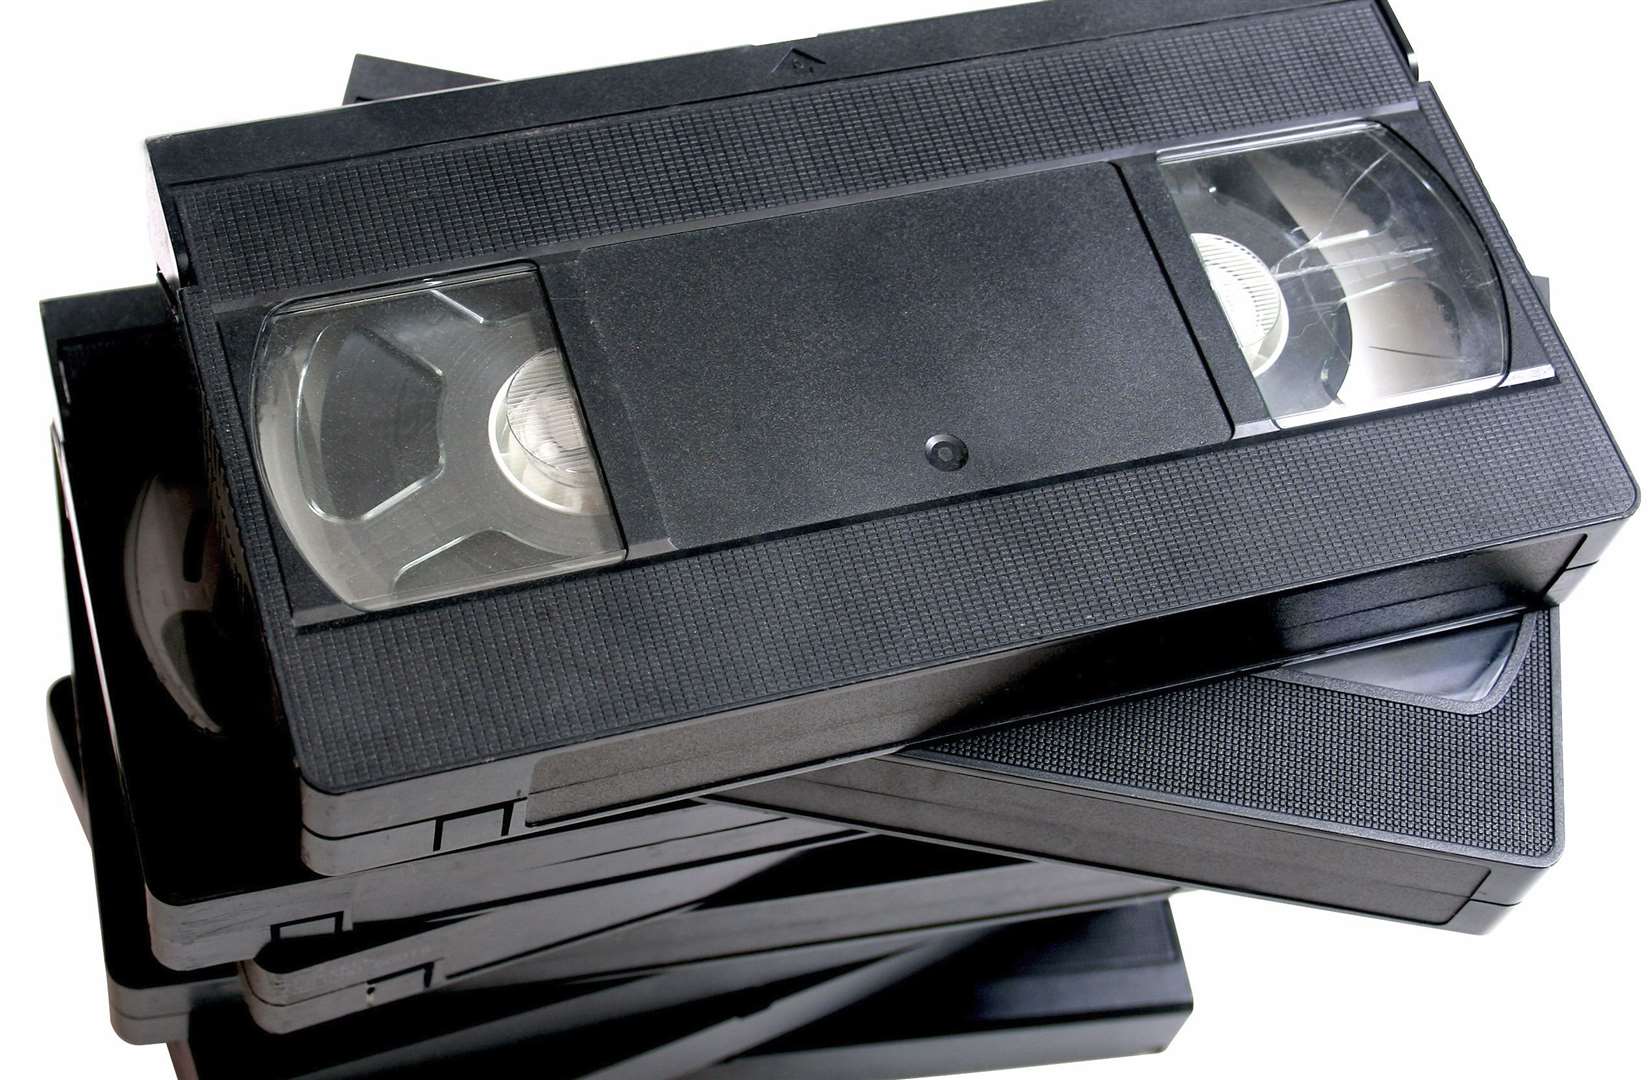 The humble VHS tape - remember them?